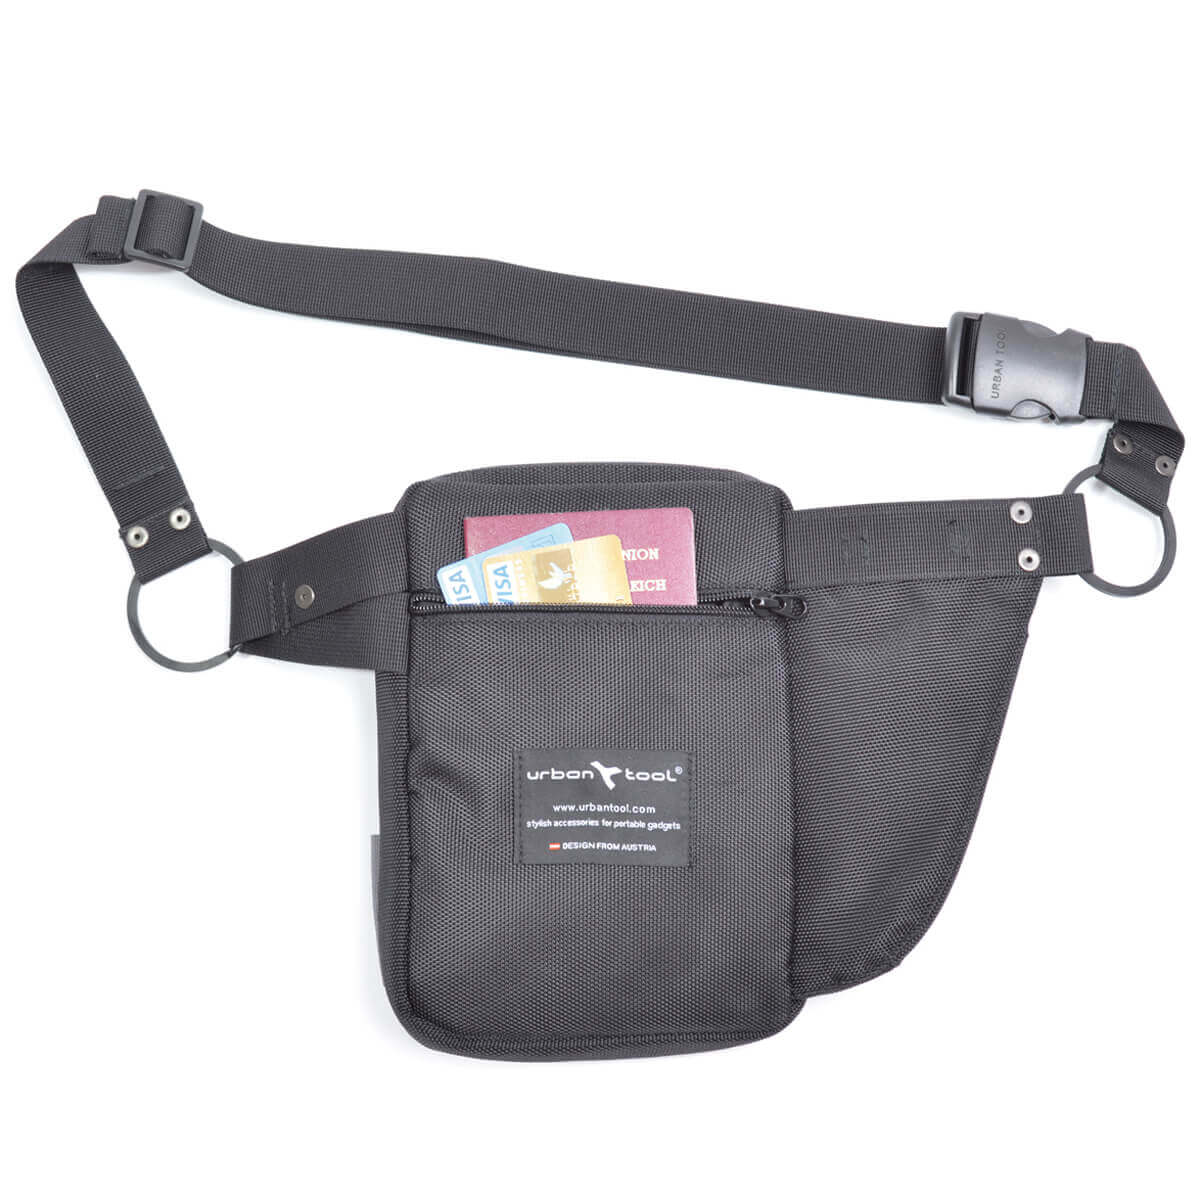 Waist holster bag for tablet and smartphones URBAN TOOL ® caseholster